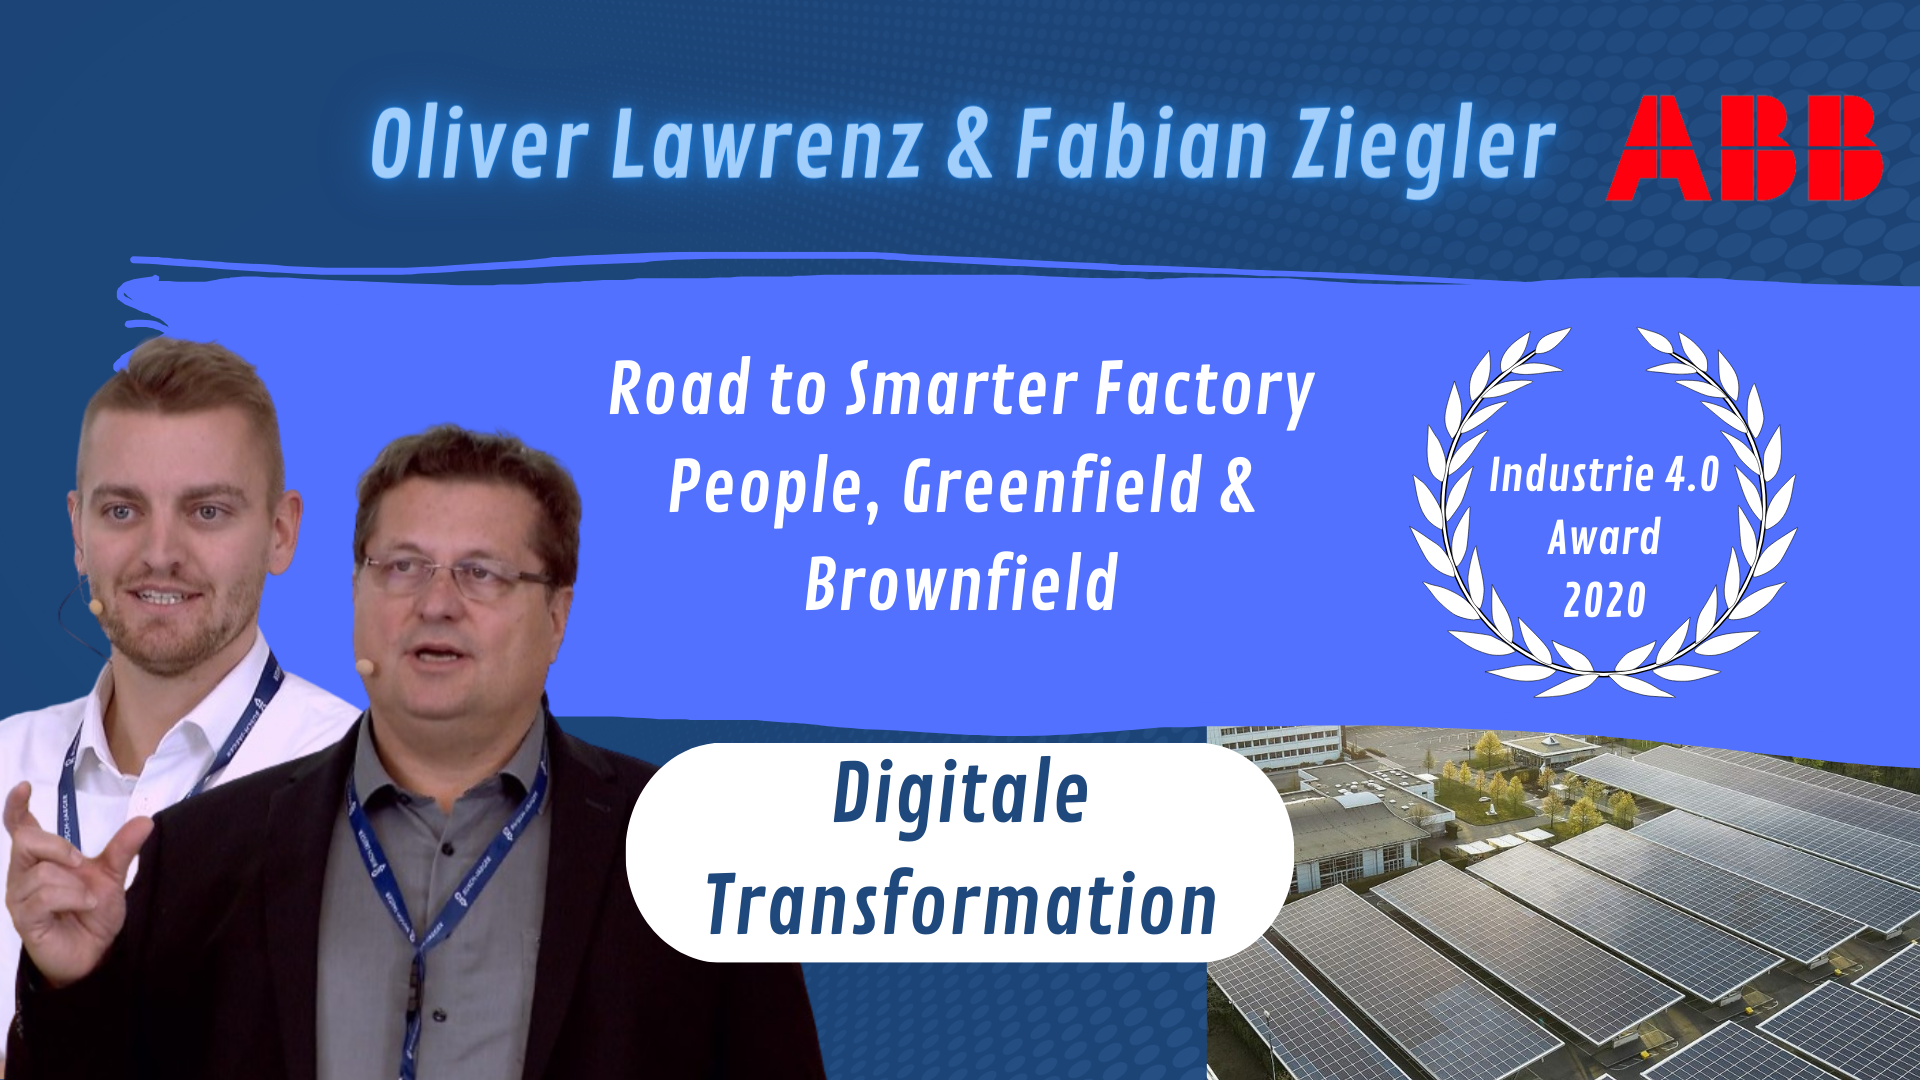 DIGITAL - Digital transformation with Oliver Lawrenz & Fabian Ziegler